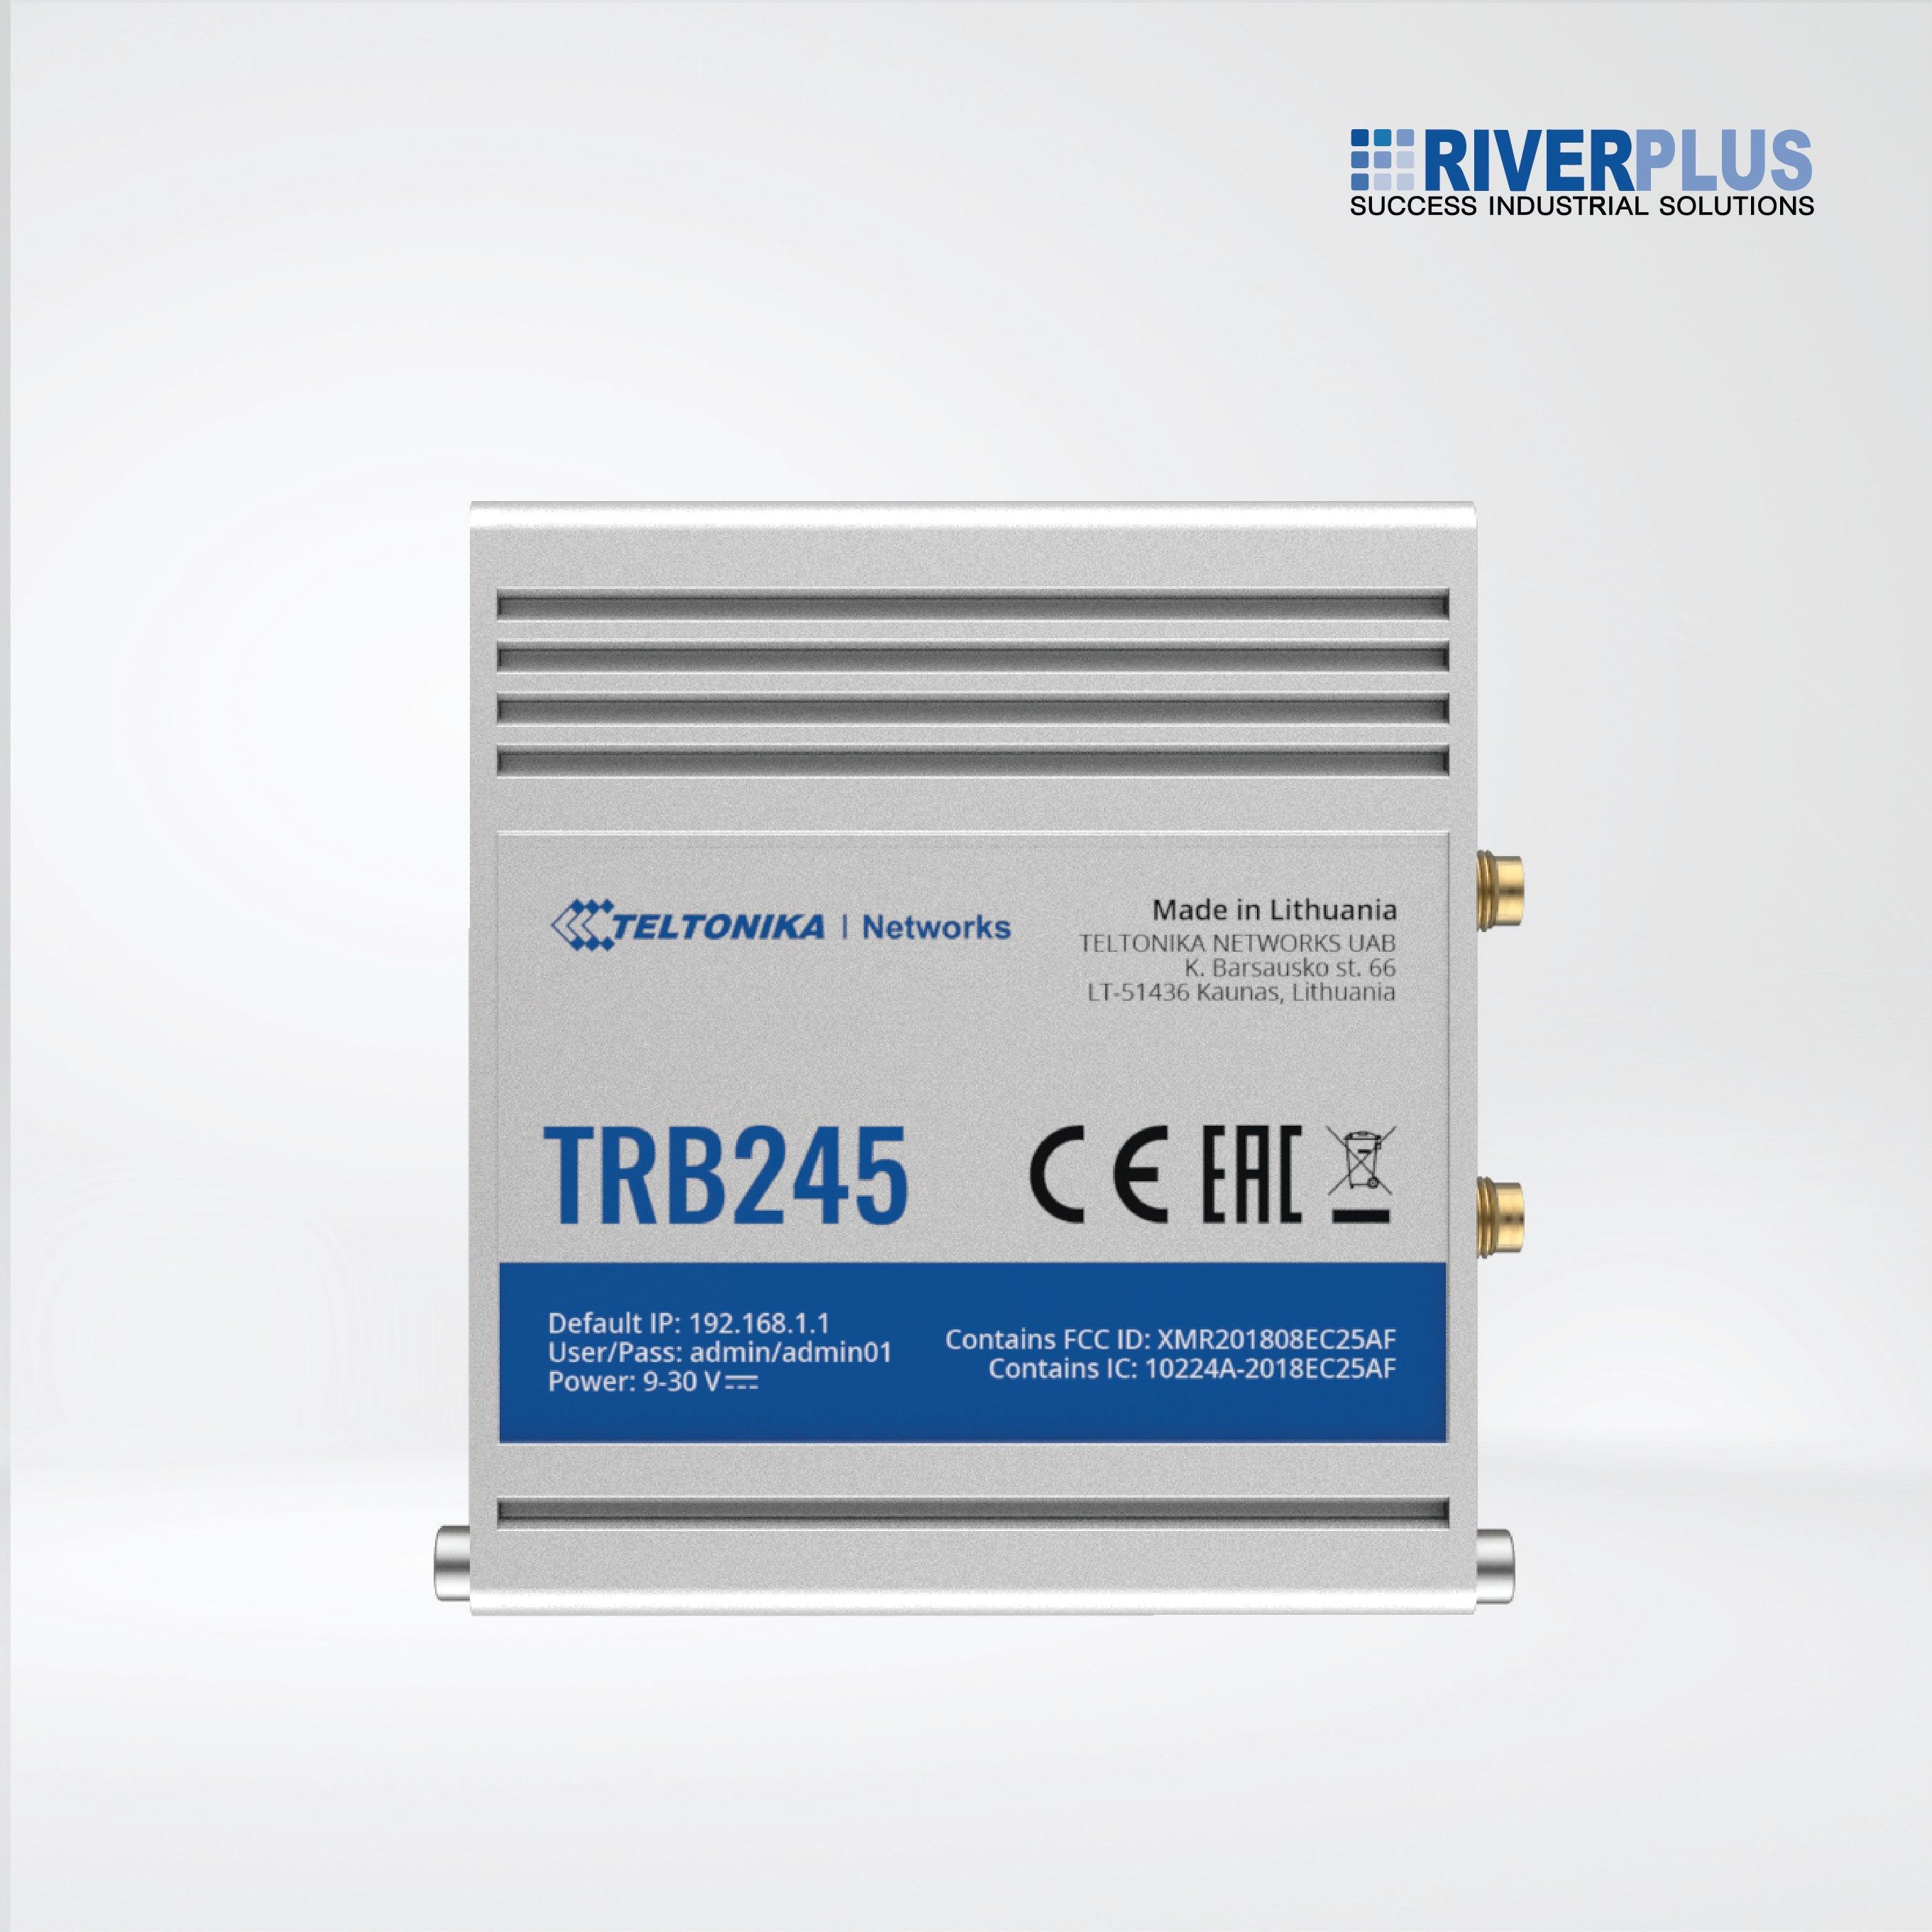 TRB245 - Industrial M2M LTE GATEWAY - Riverplus